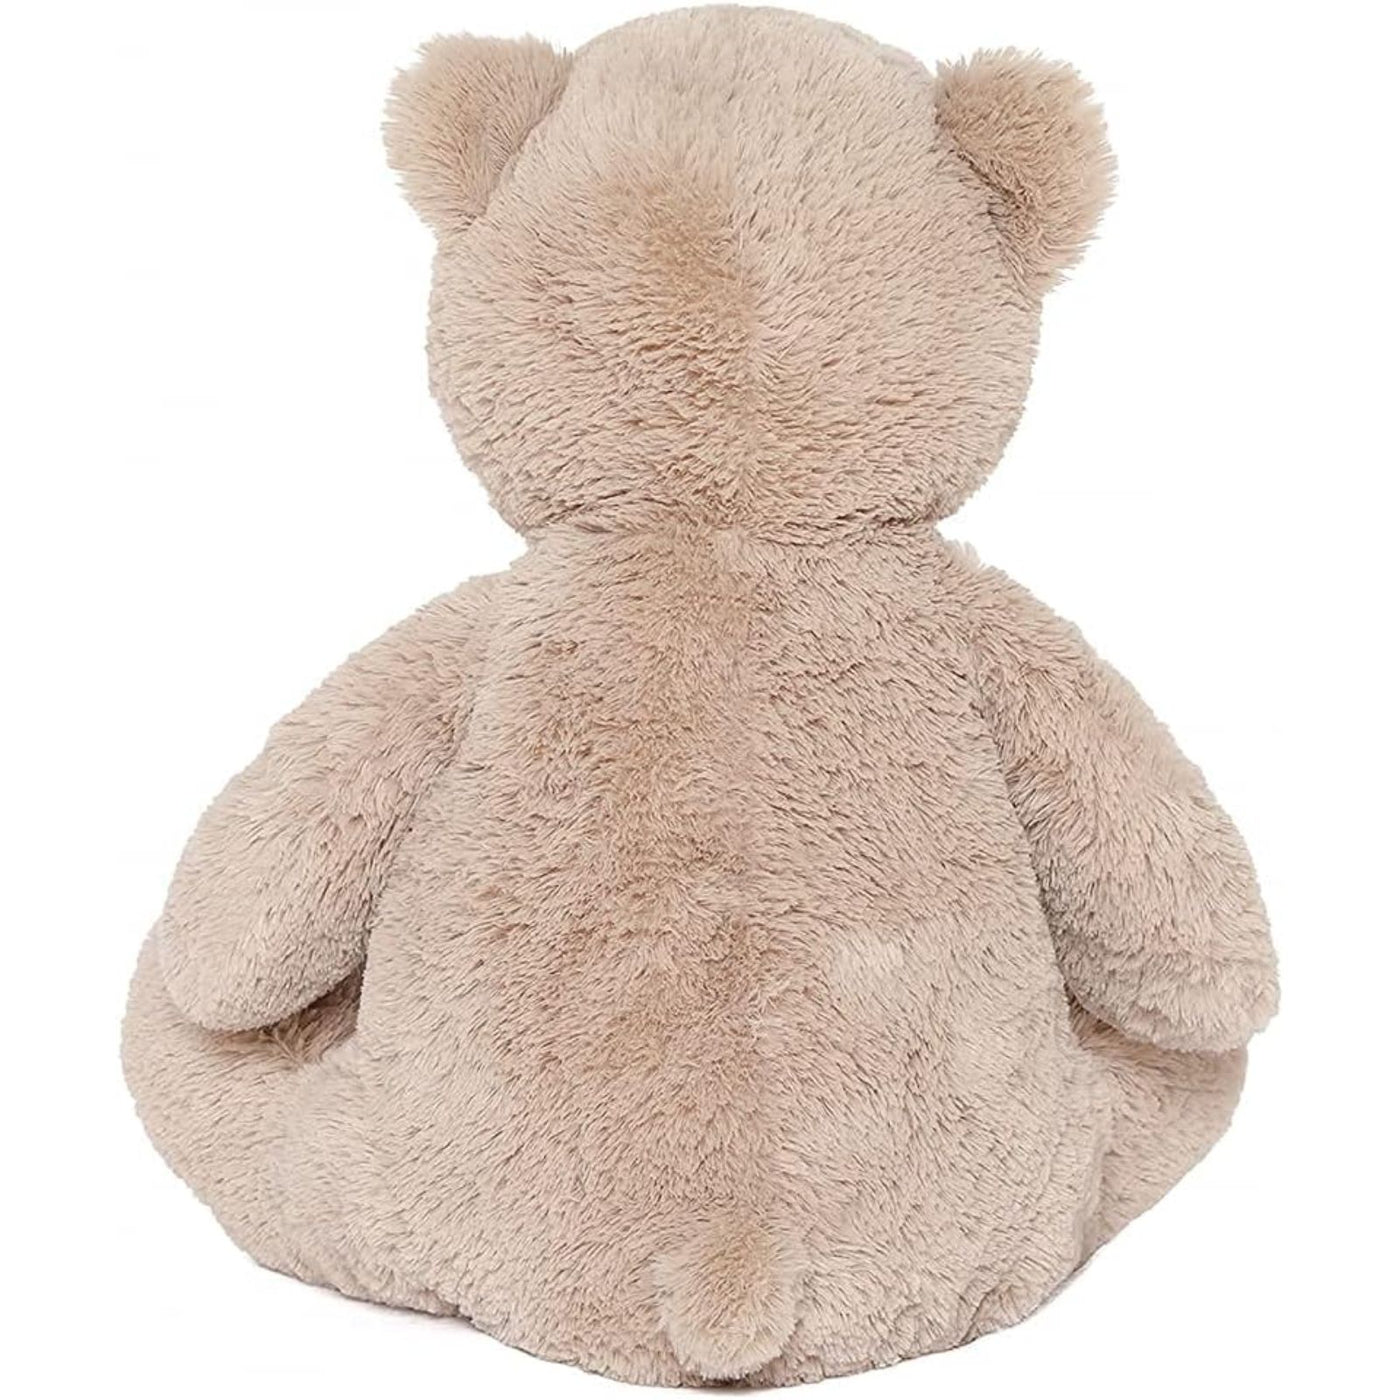 Small Teddy Bear Stuffed Toy, 24 Inches